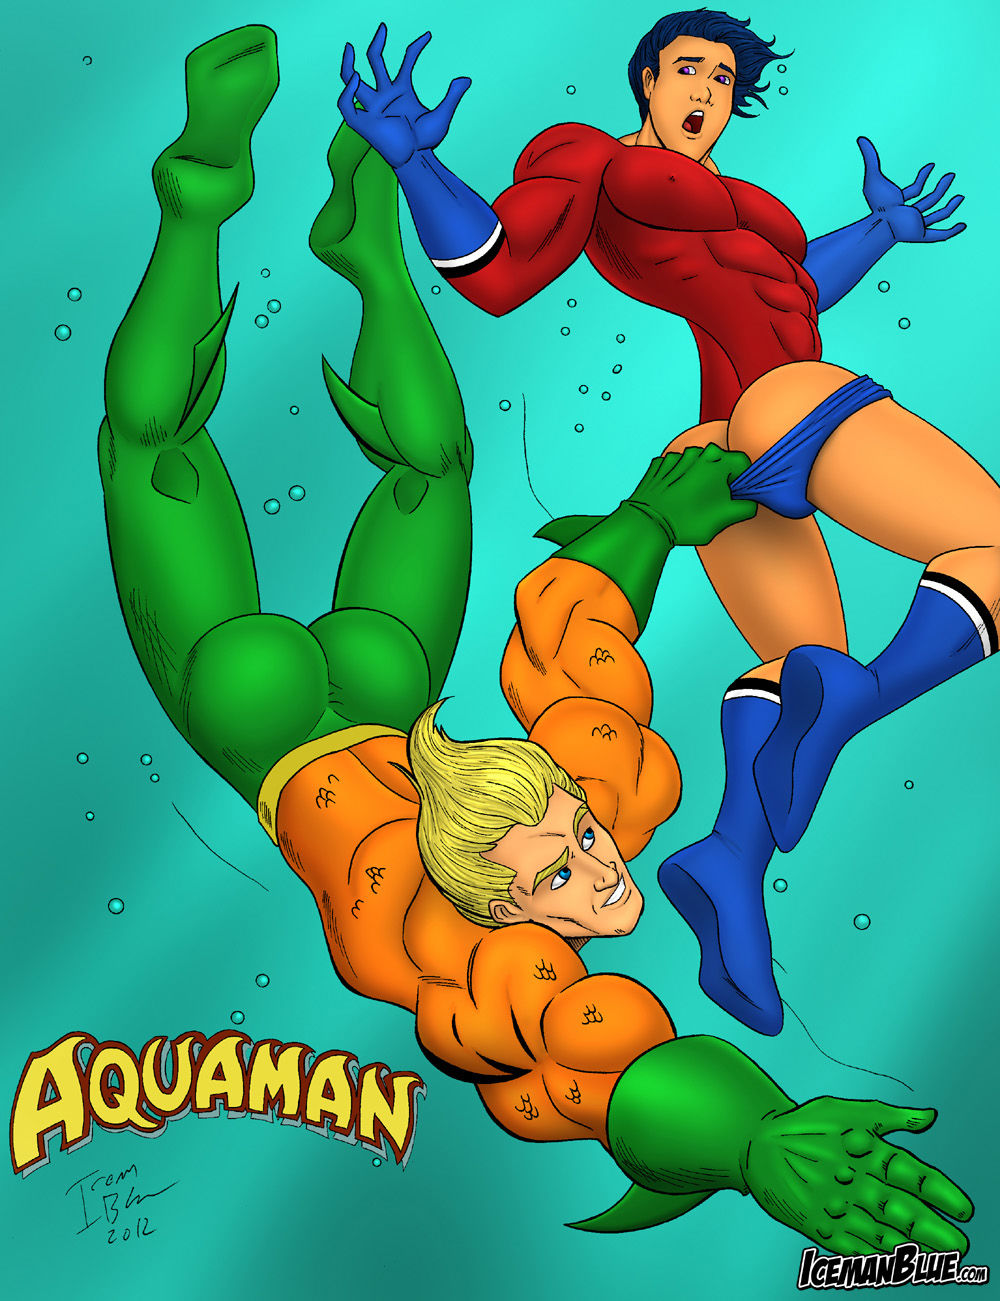 Aquaman Iceman Blue page 1